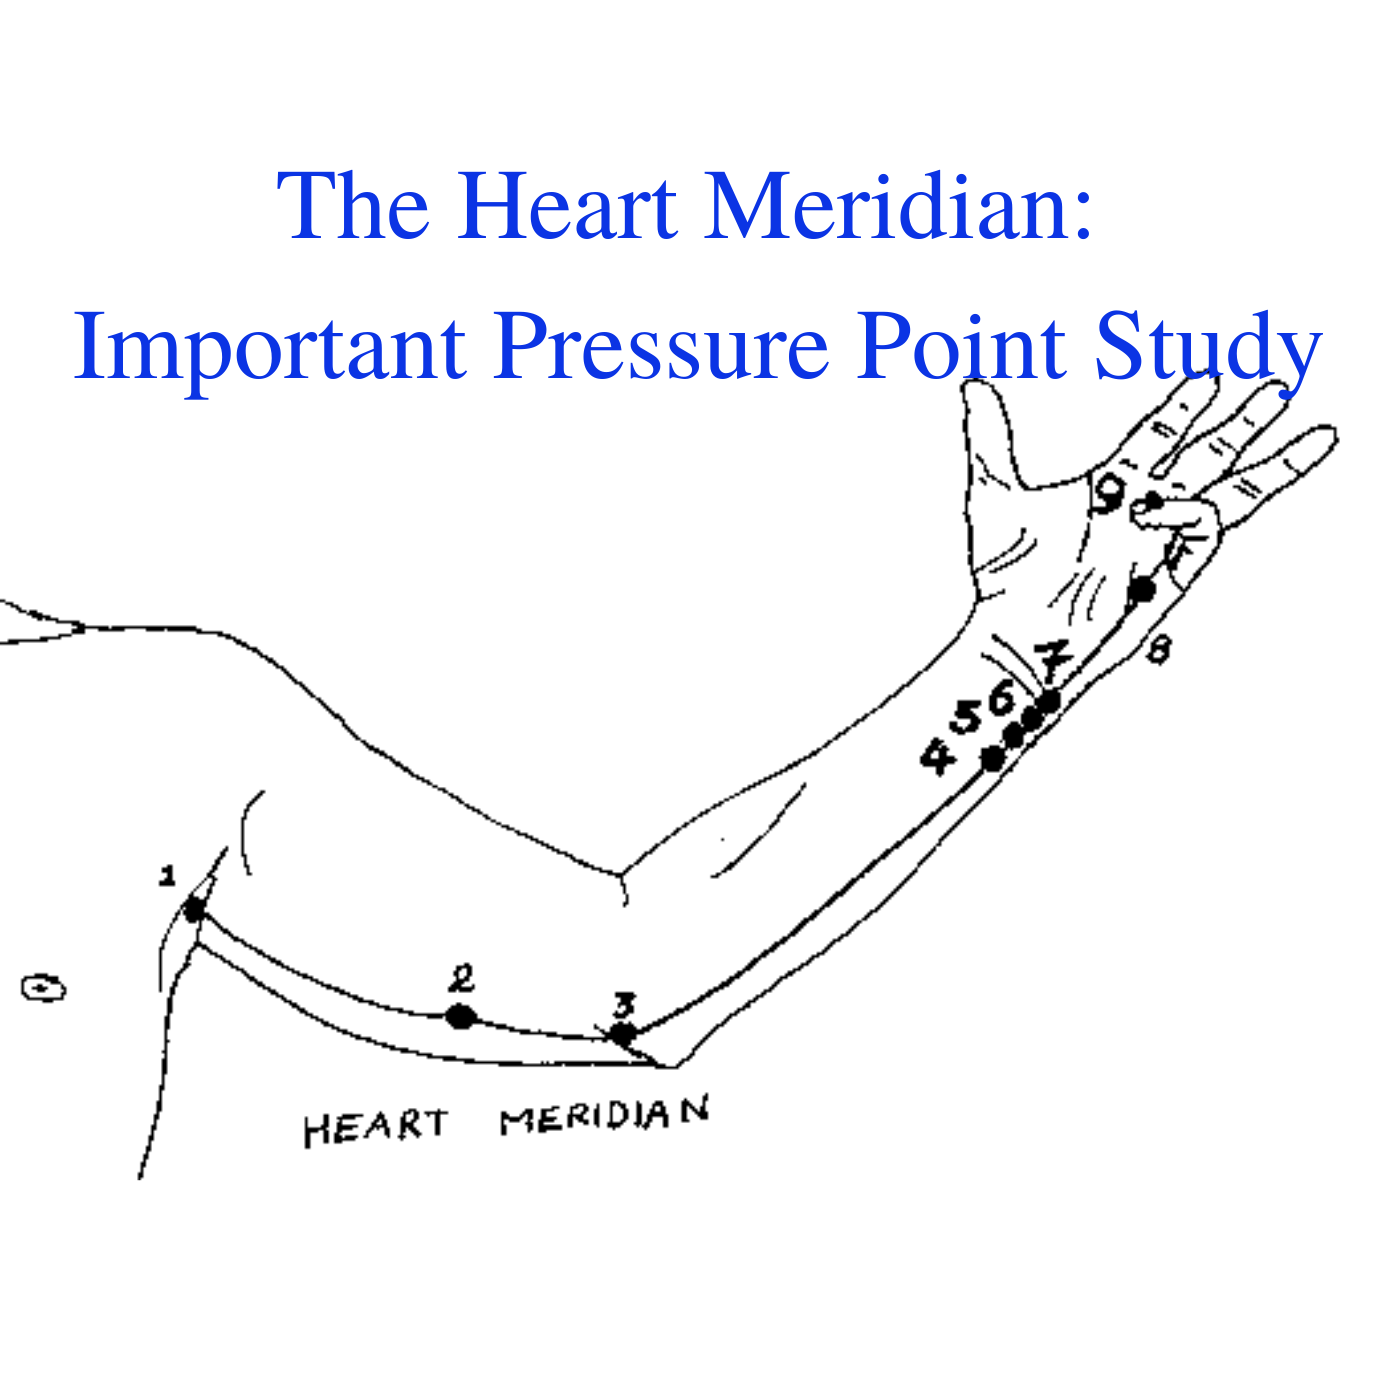 * The Heart Meridian